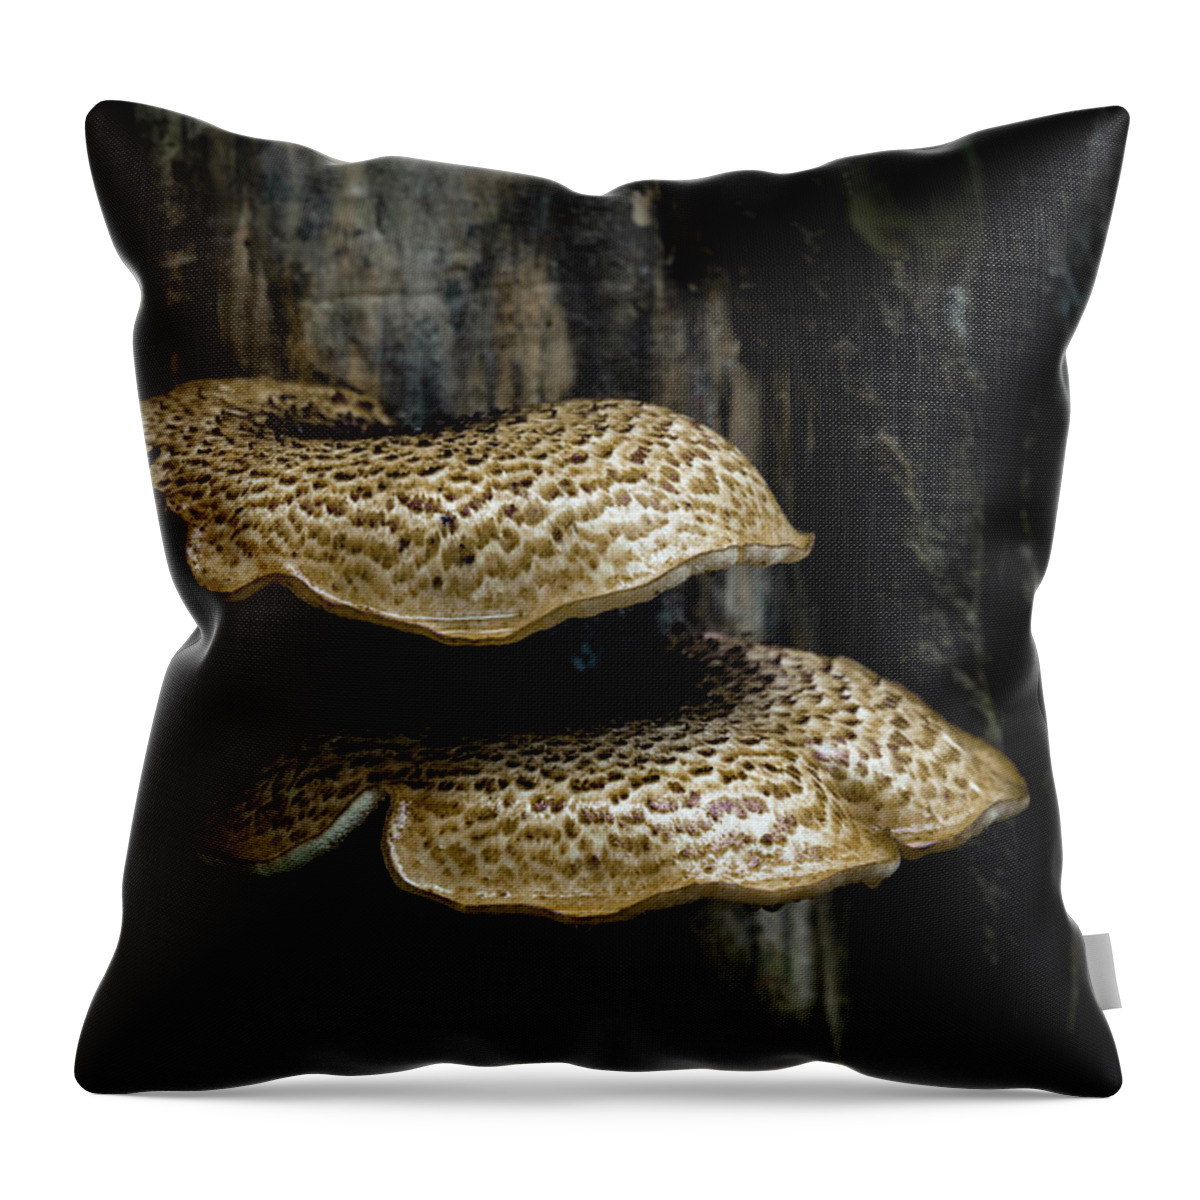 Dryad's Saddle Throw Pillow featuring the photograph Dryads Saddle Fungi by Tom Mc Nemar